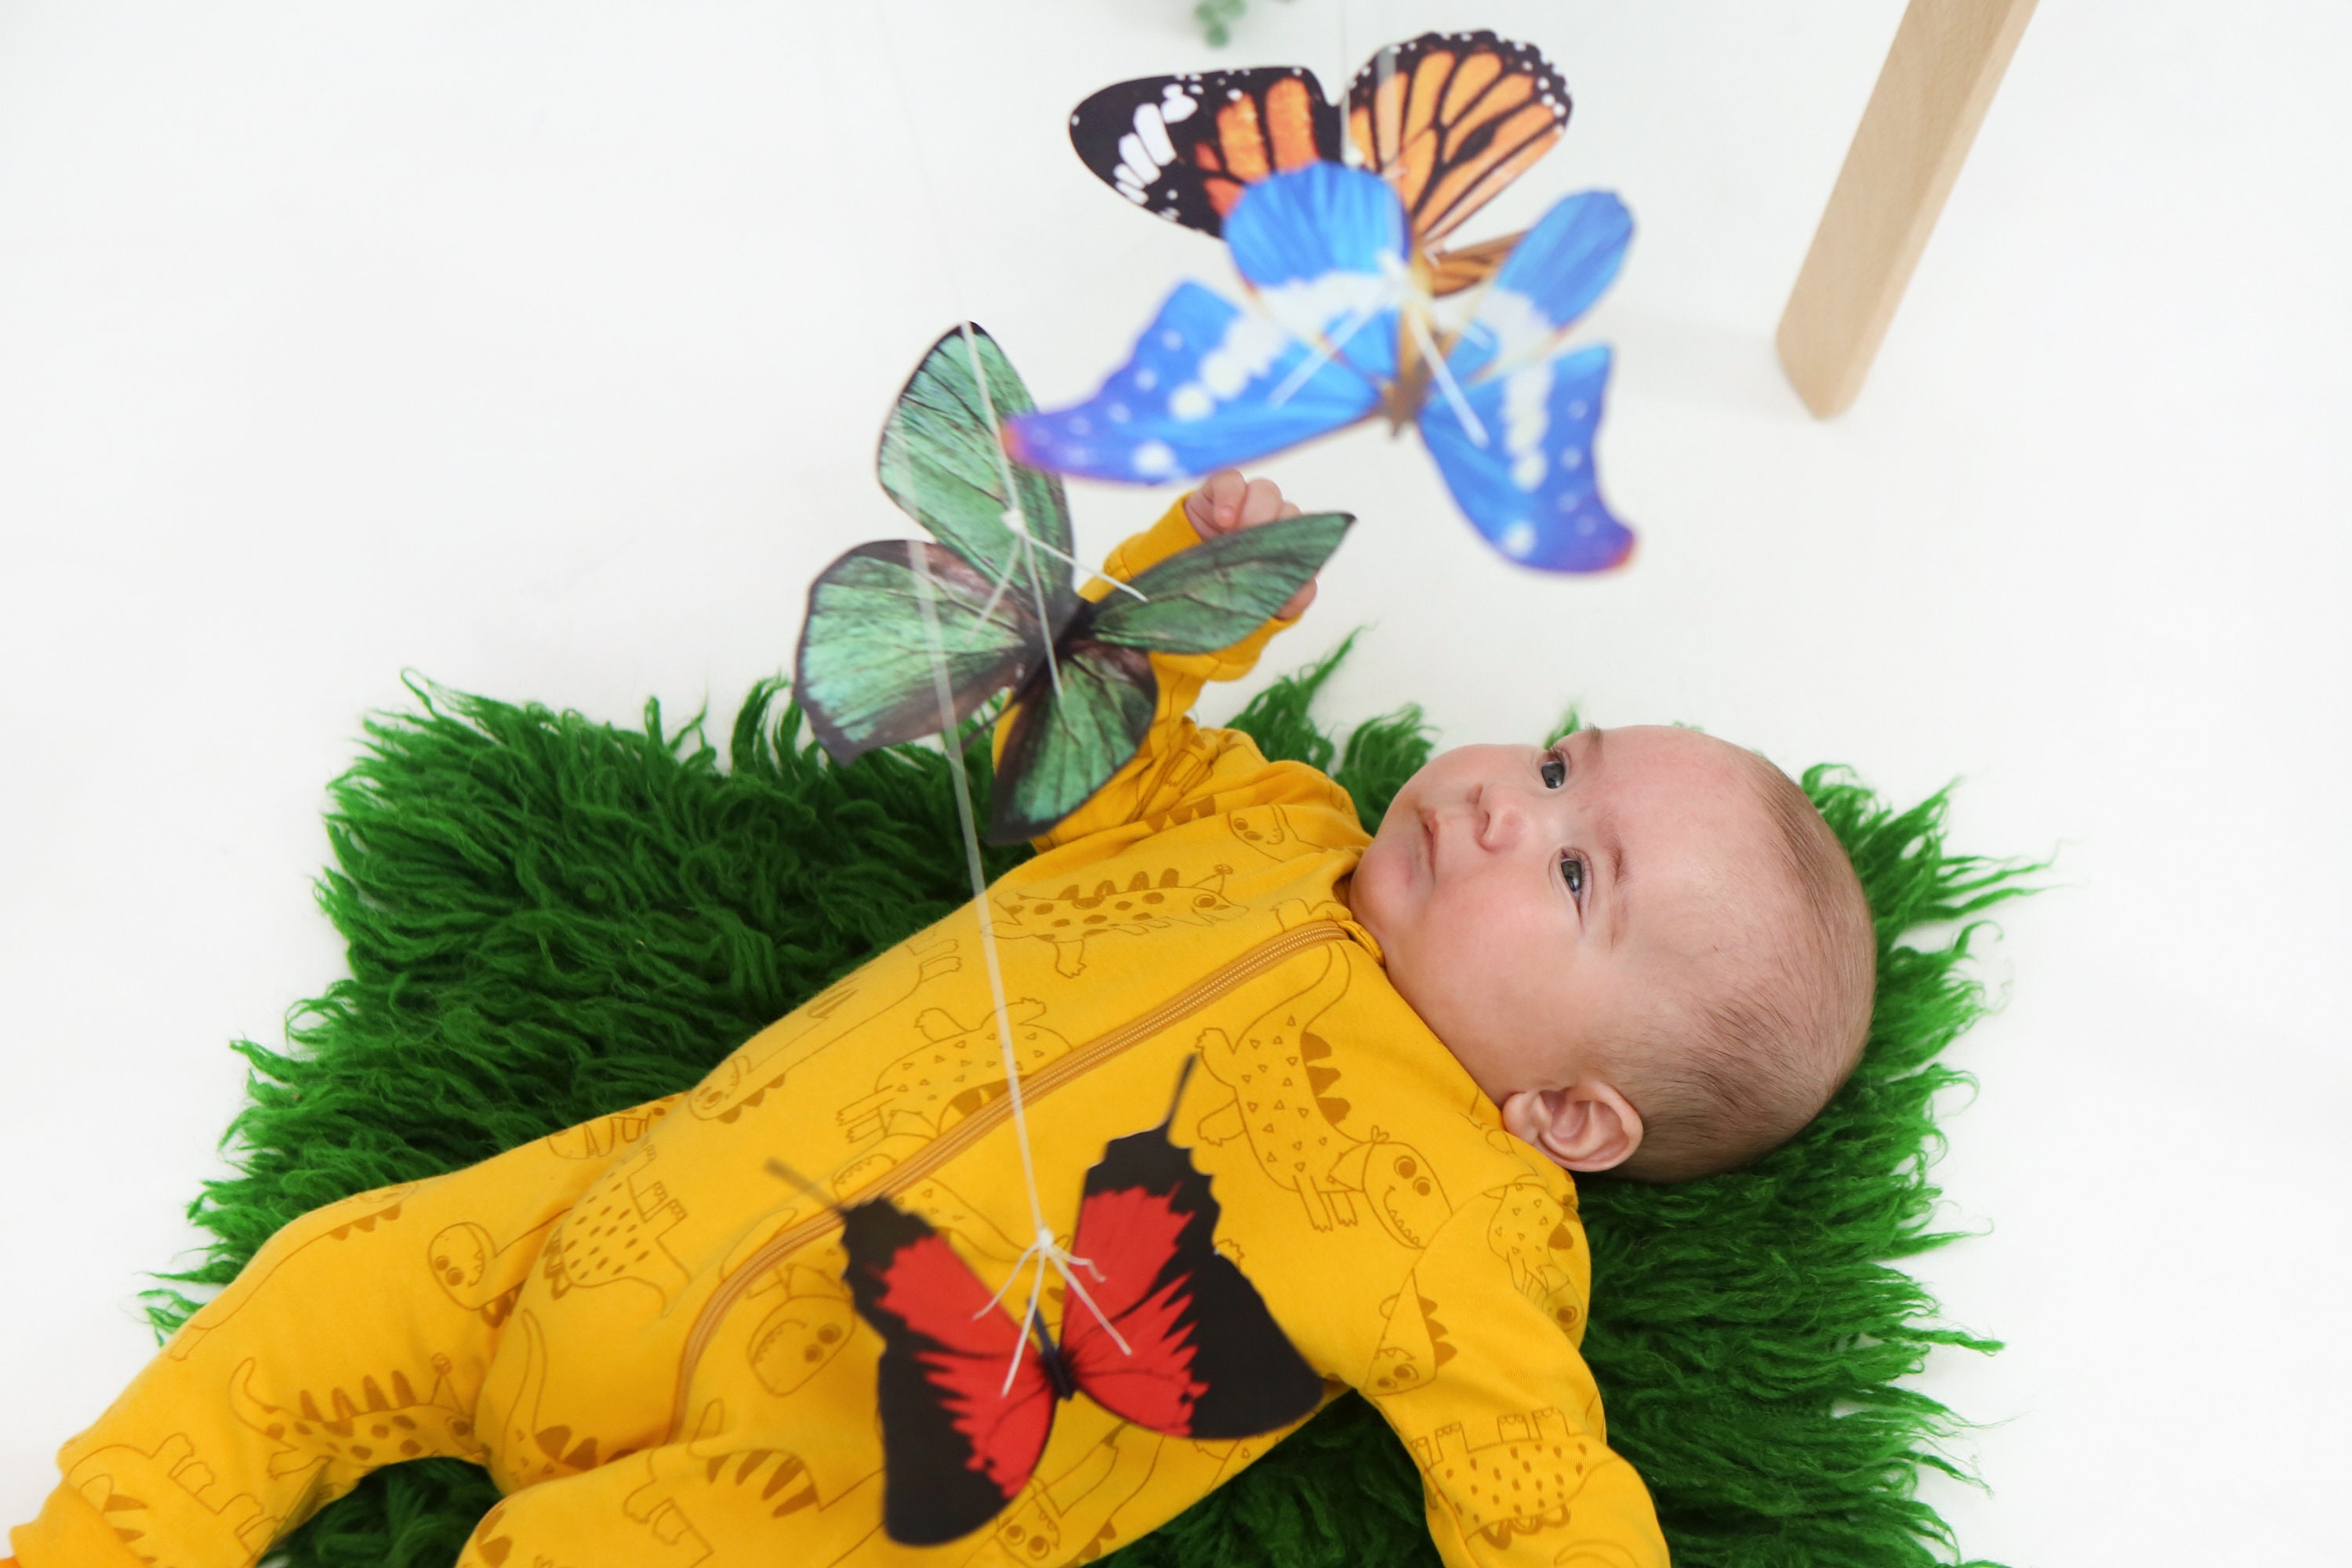 Mobile Bed Bell Holder Bébé: Baby Musical Crib Support De Cloche